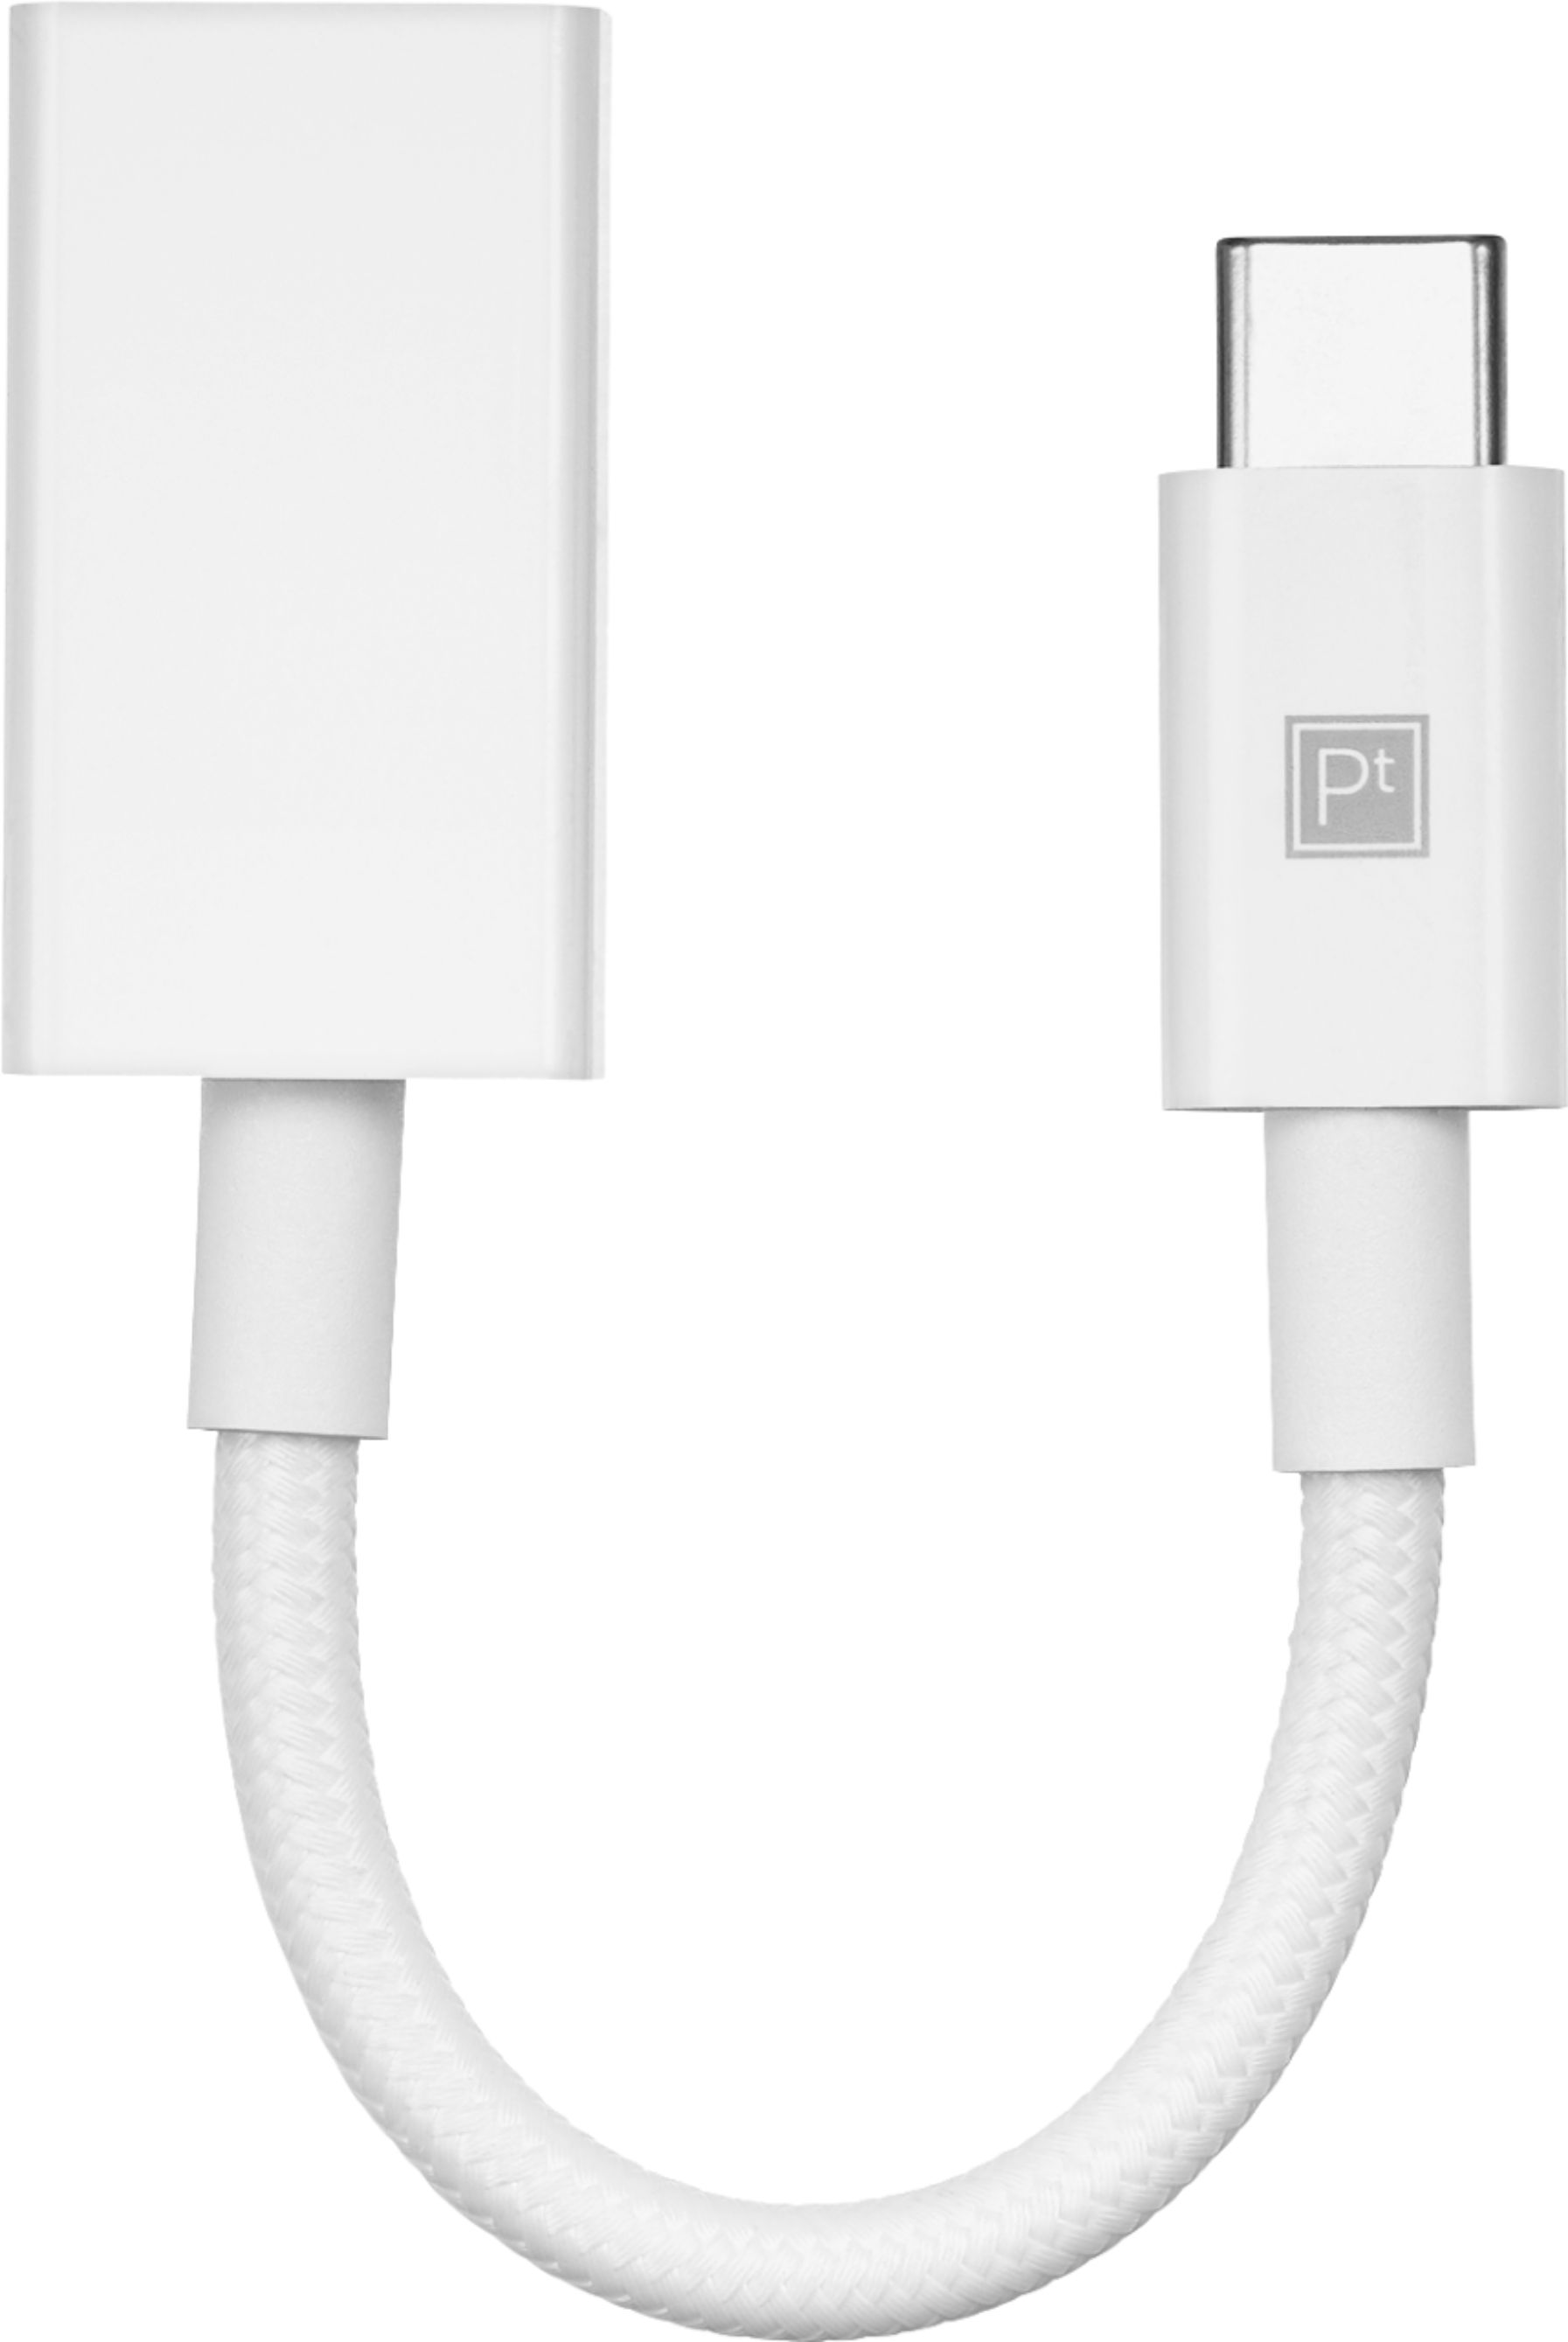 wireless usb adapter for apple mac